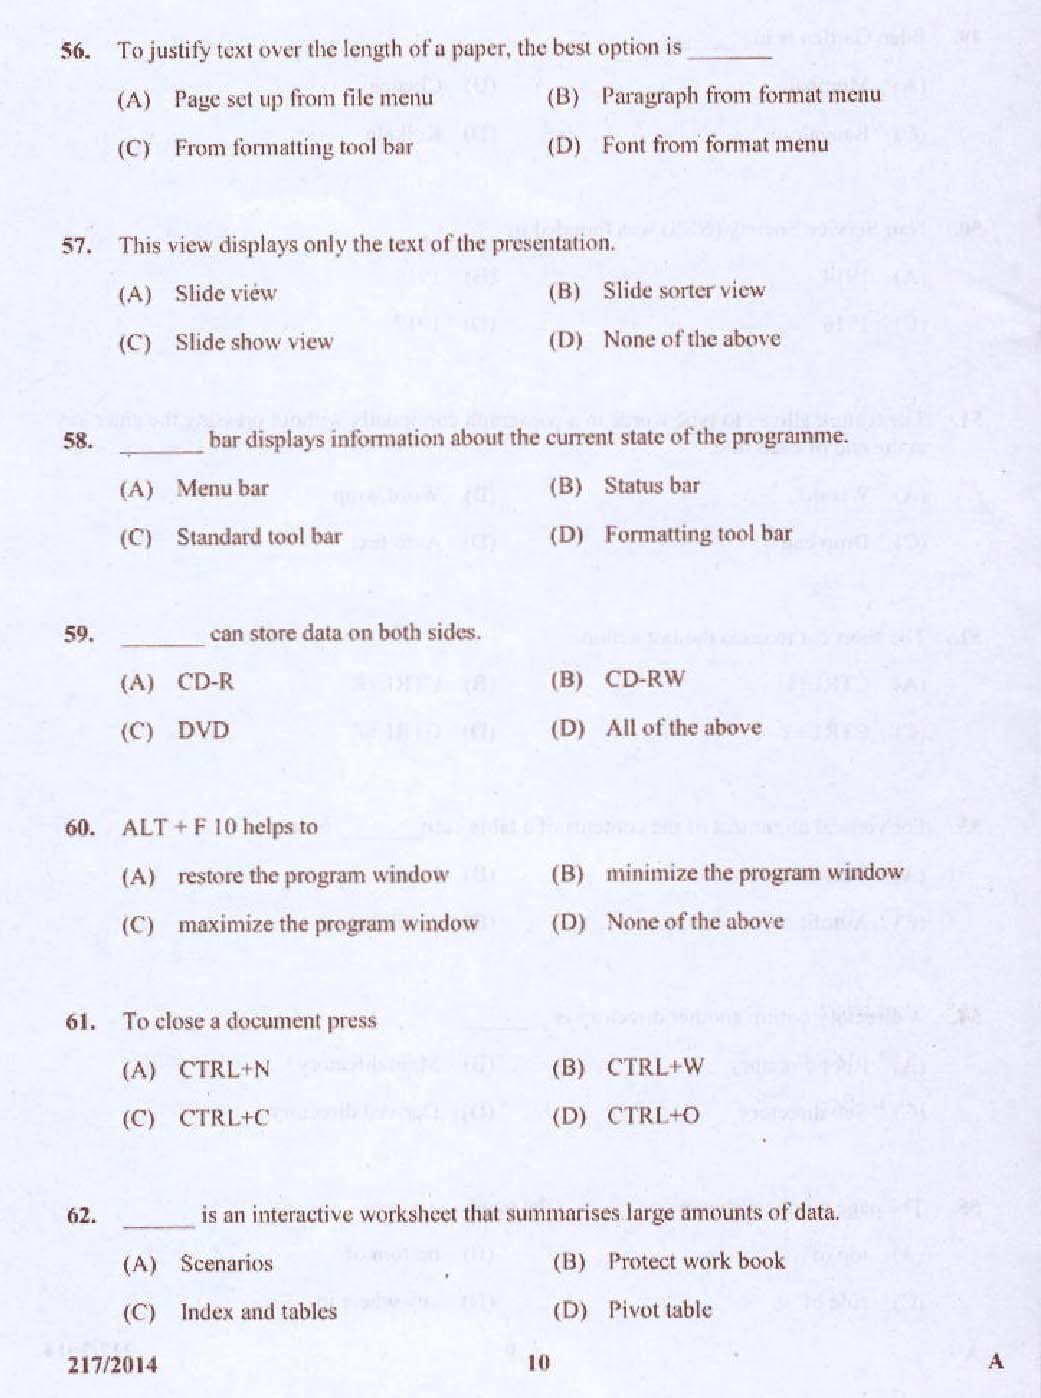 Kerala PSC Stenographer Exam 2014 Question Paper Code 2172014 10